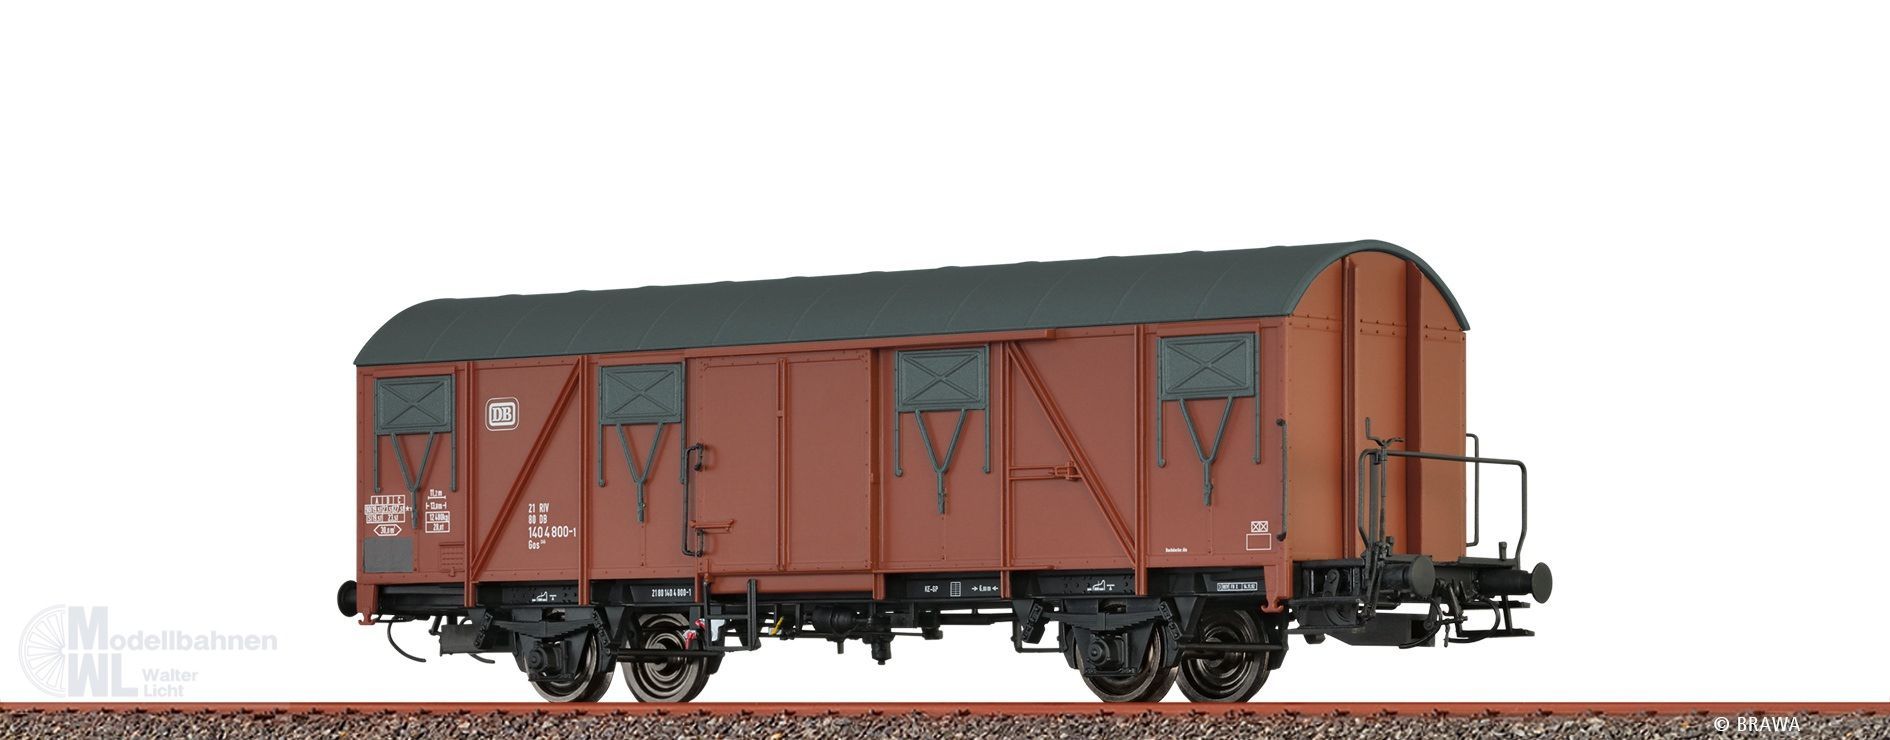 Brawa 47299 - Güterwagen ged. DB Ep.IV Gos245 21 80 140 4 800-1 H0/GL